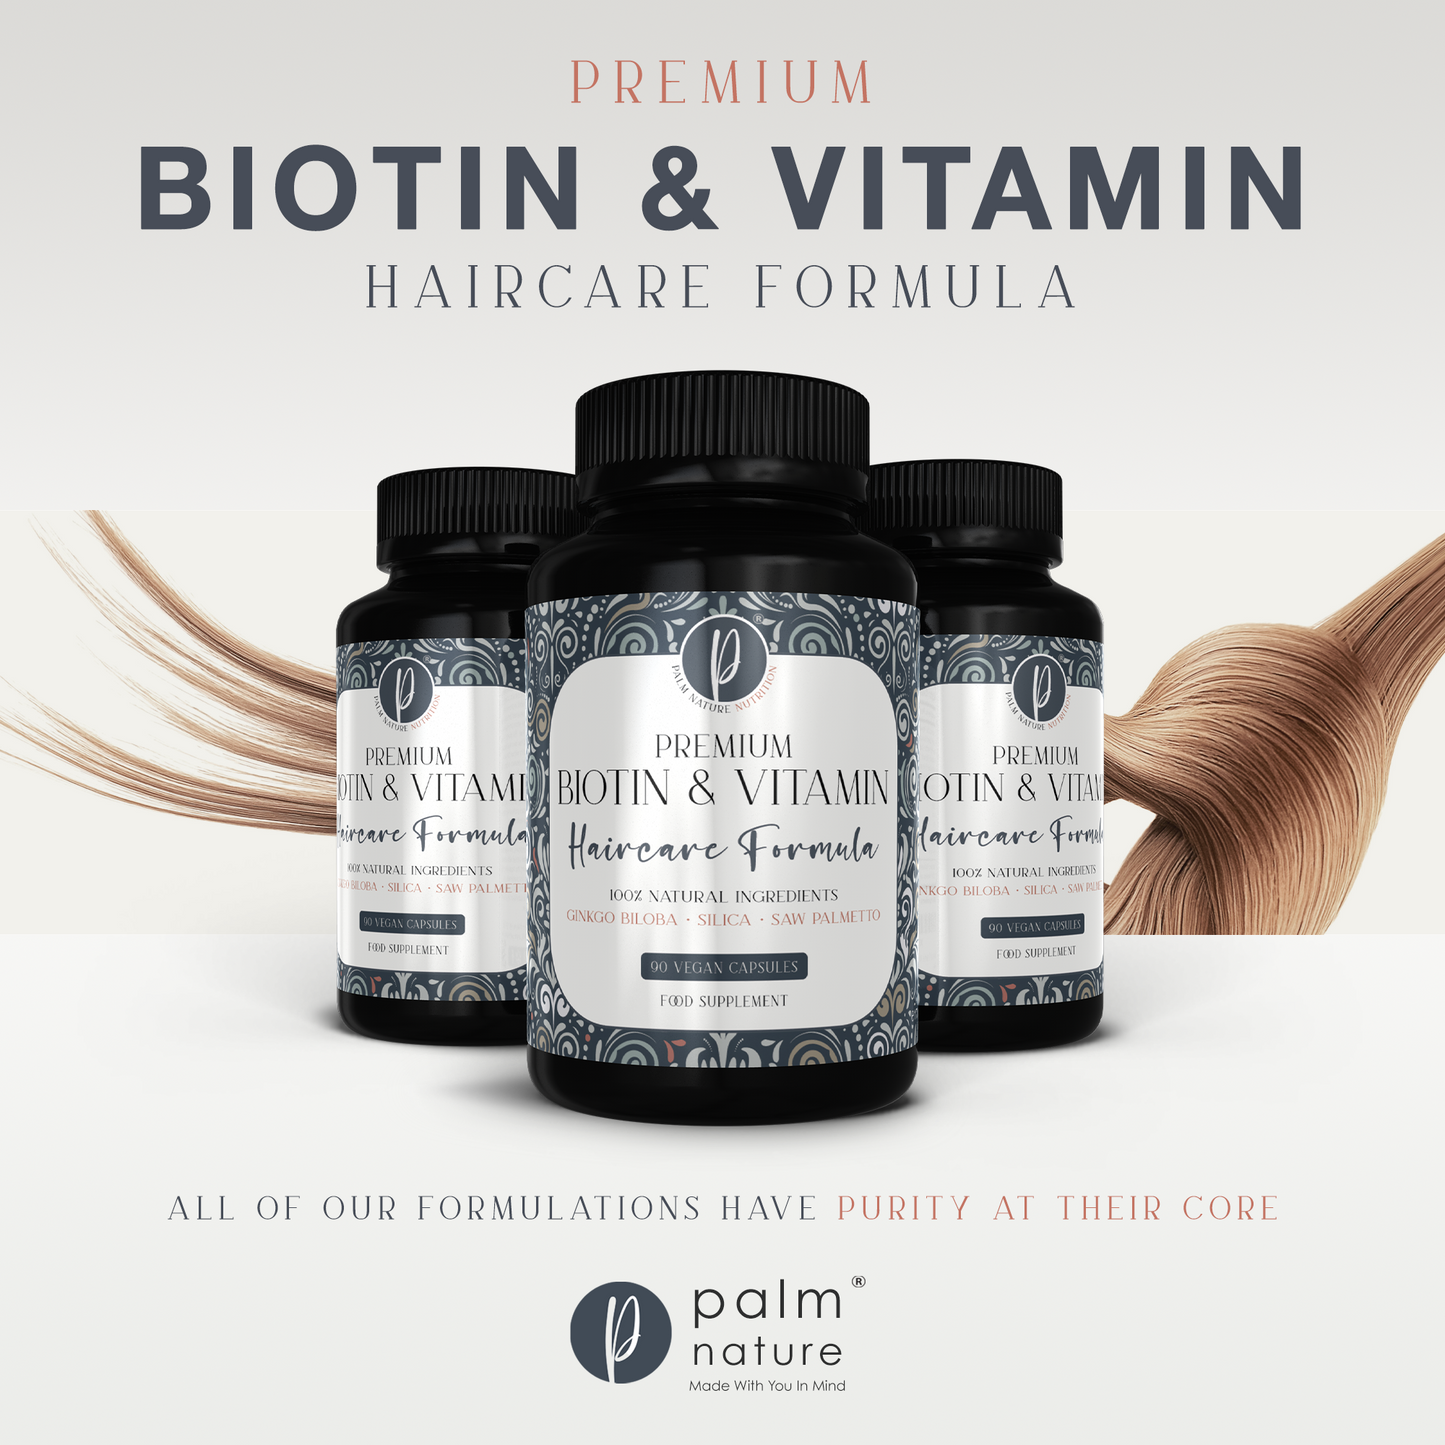 Premium Biotin & Vitamin Haircare Formula